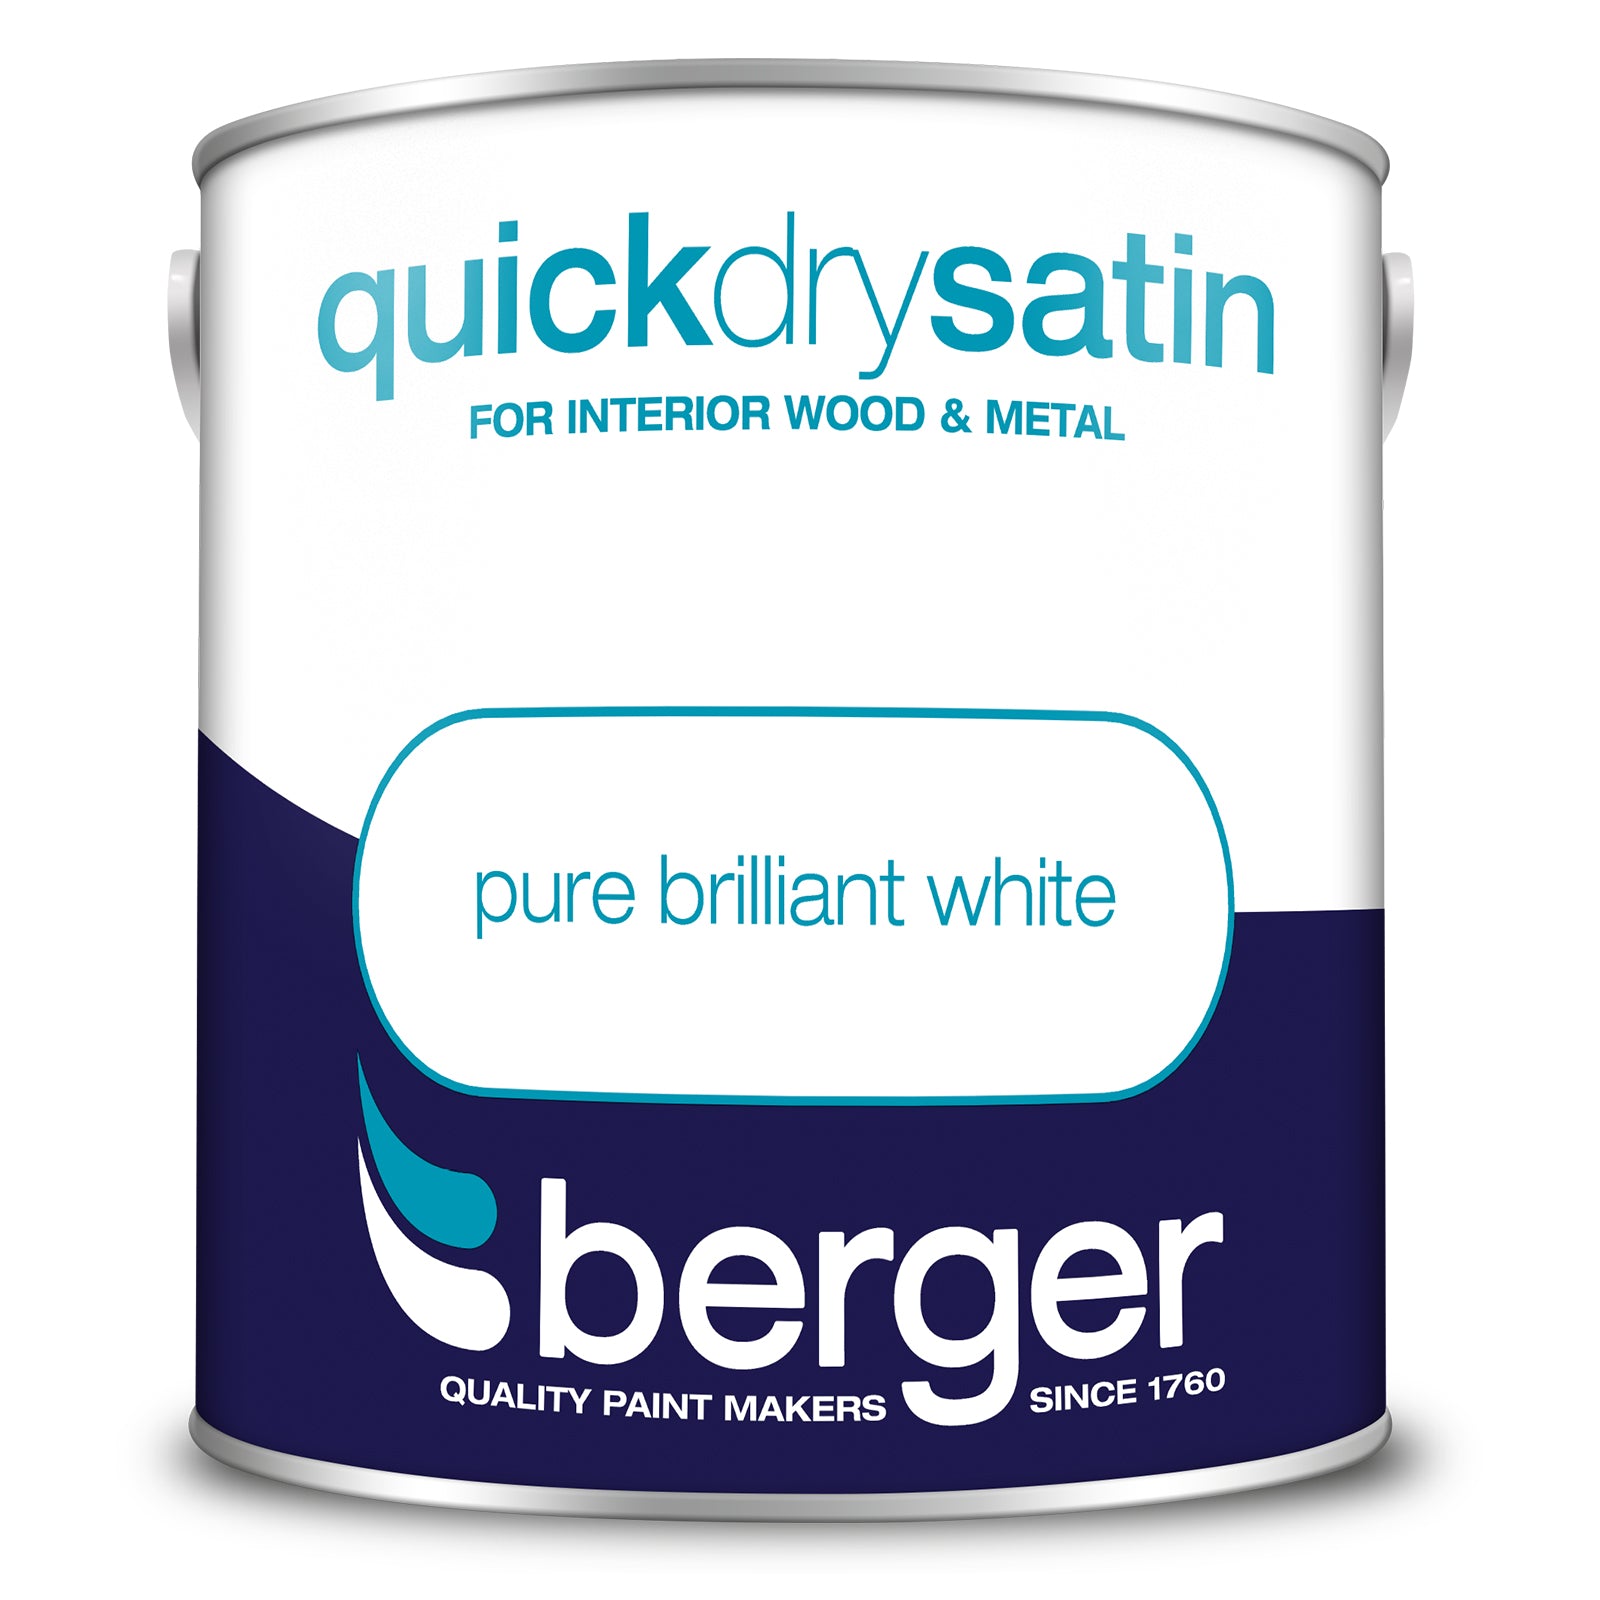 Berger Quick Drying Satin Pure Brilliant White 2.5L